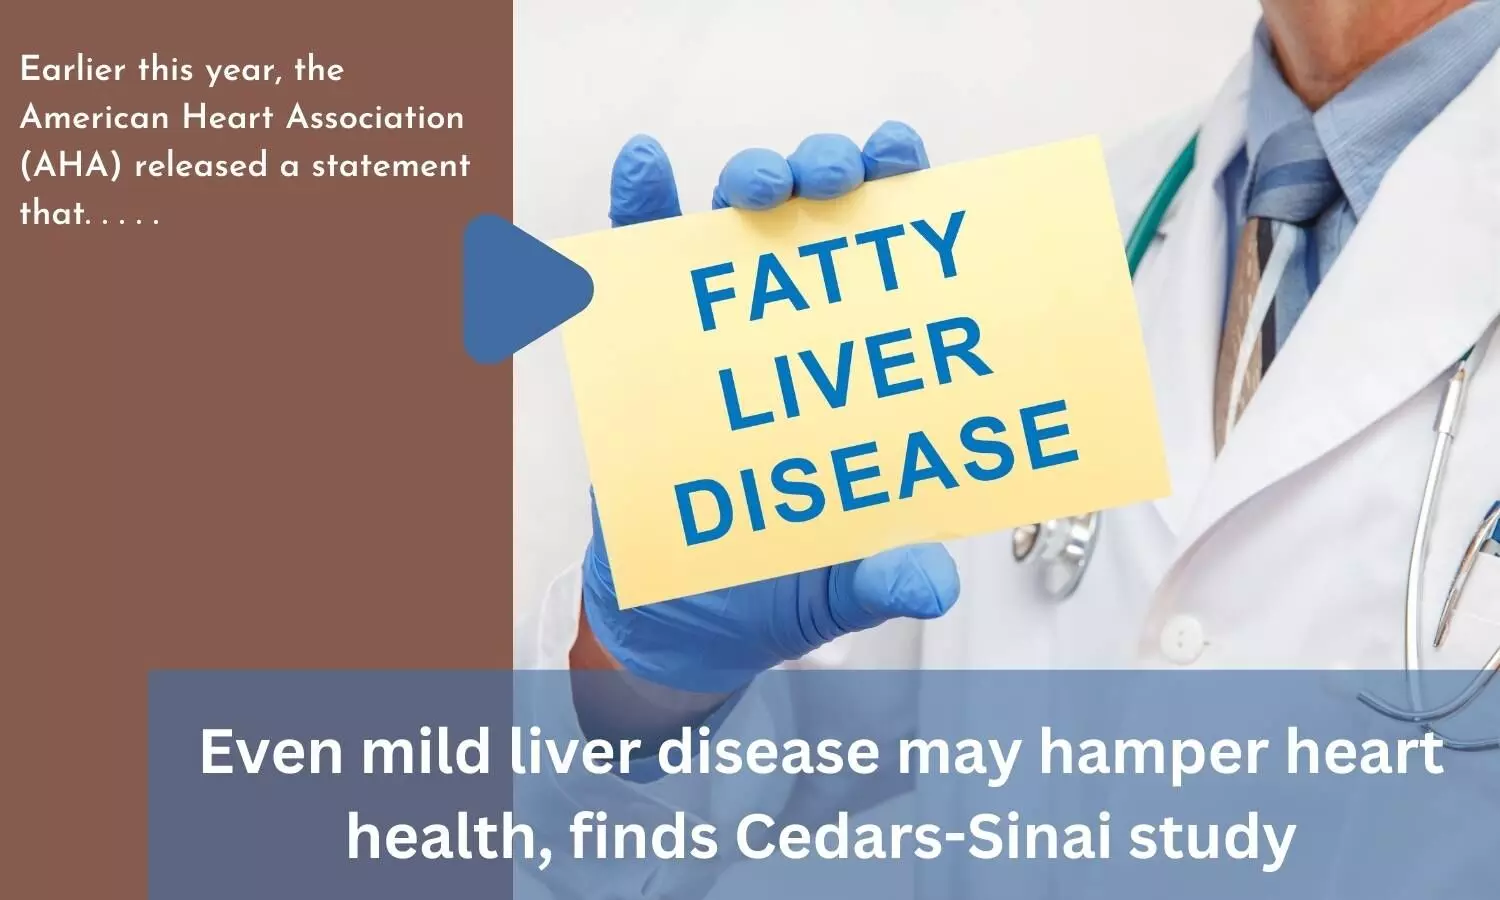 Even mild liver disease may hamper heart health, finds Cedars-Sinai study